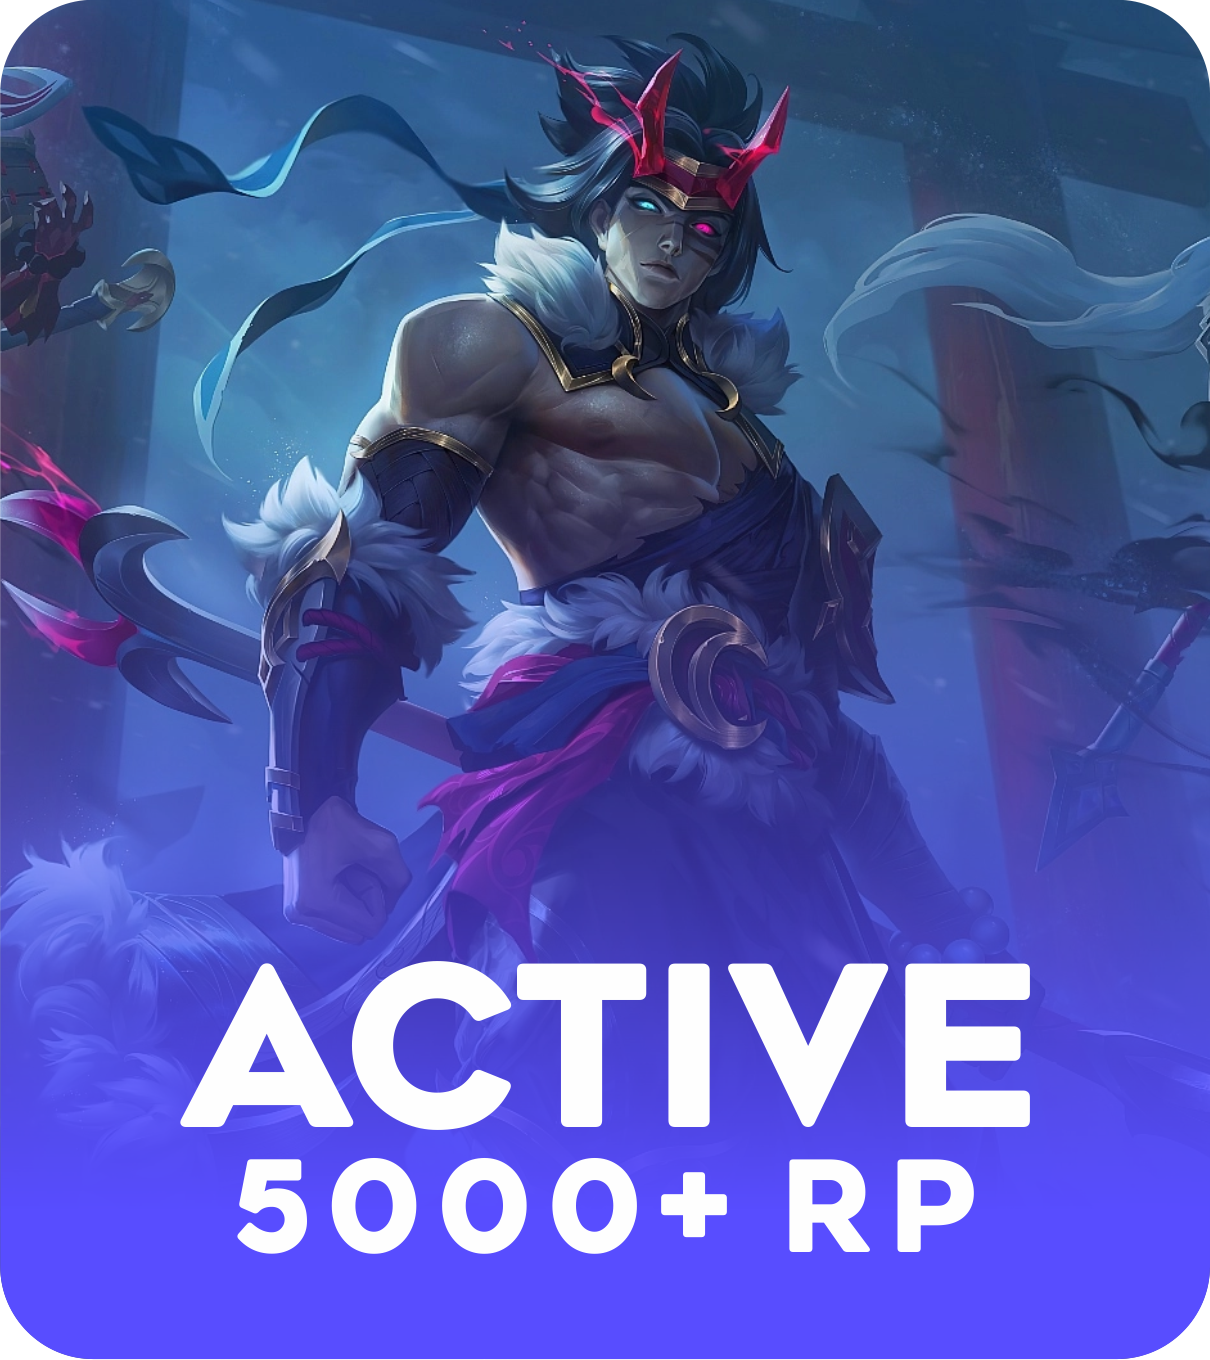 Active 5000+ RP Account 